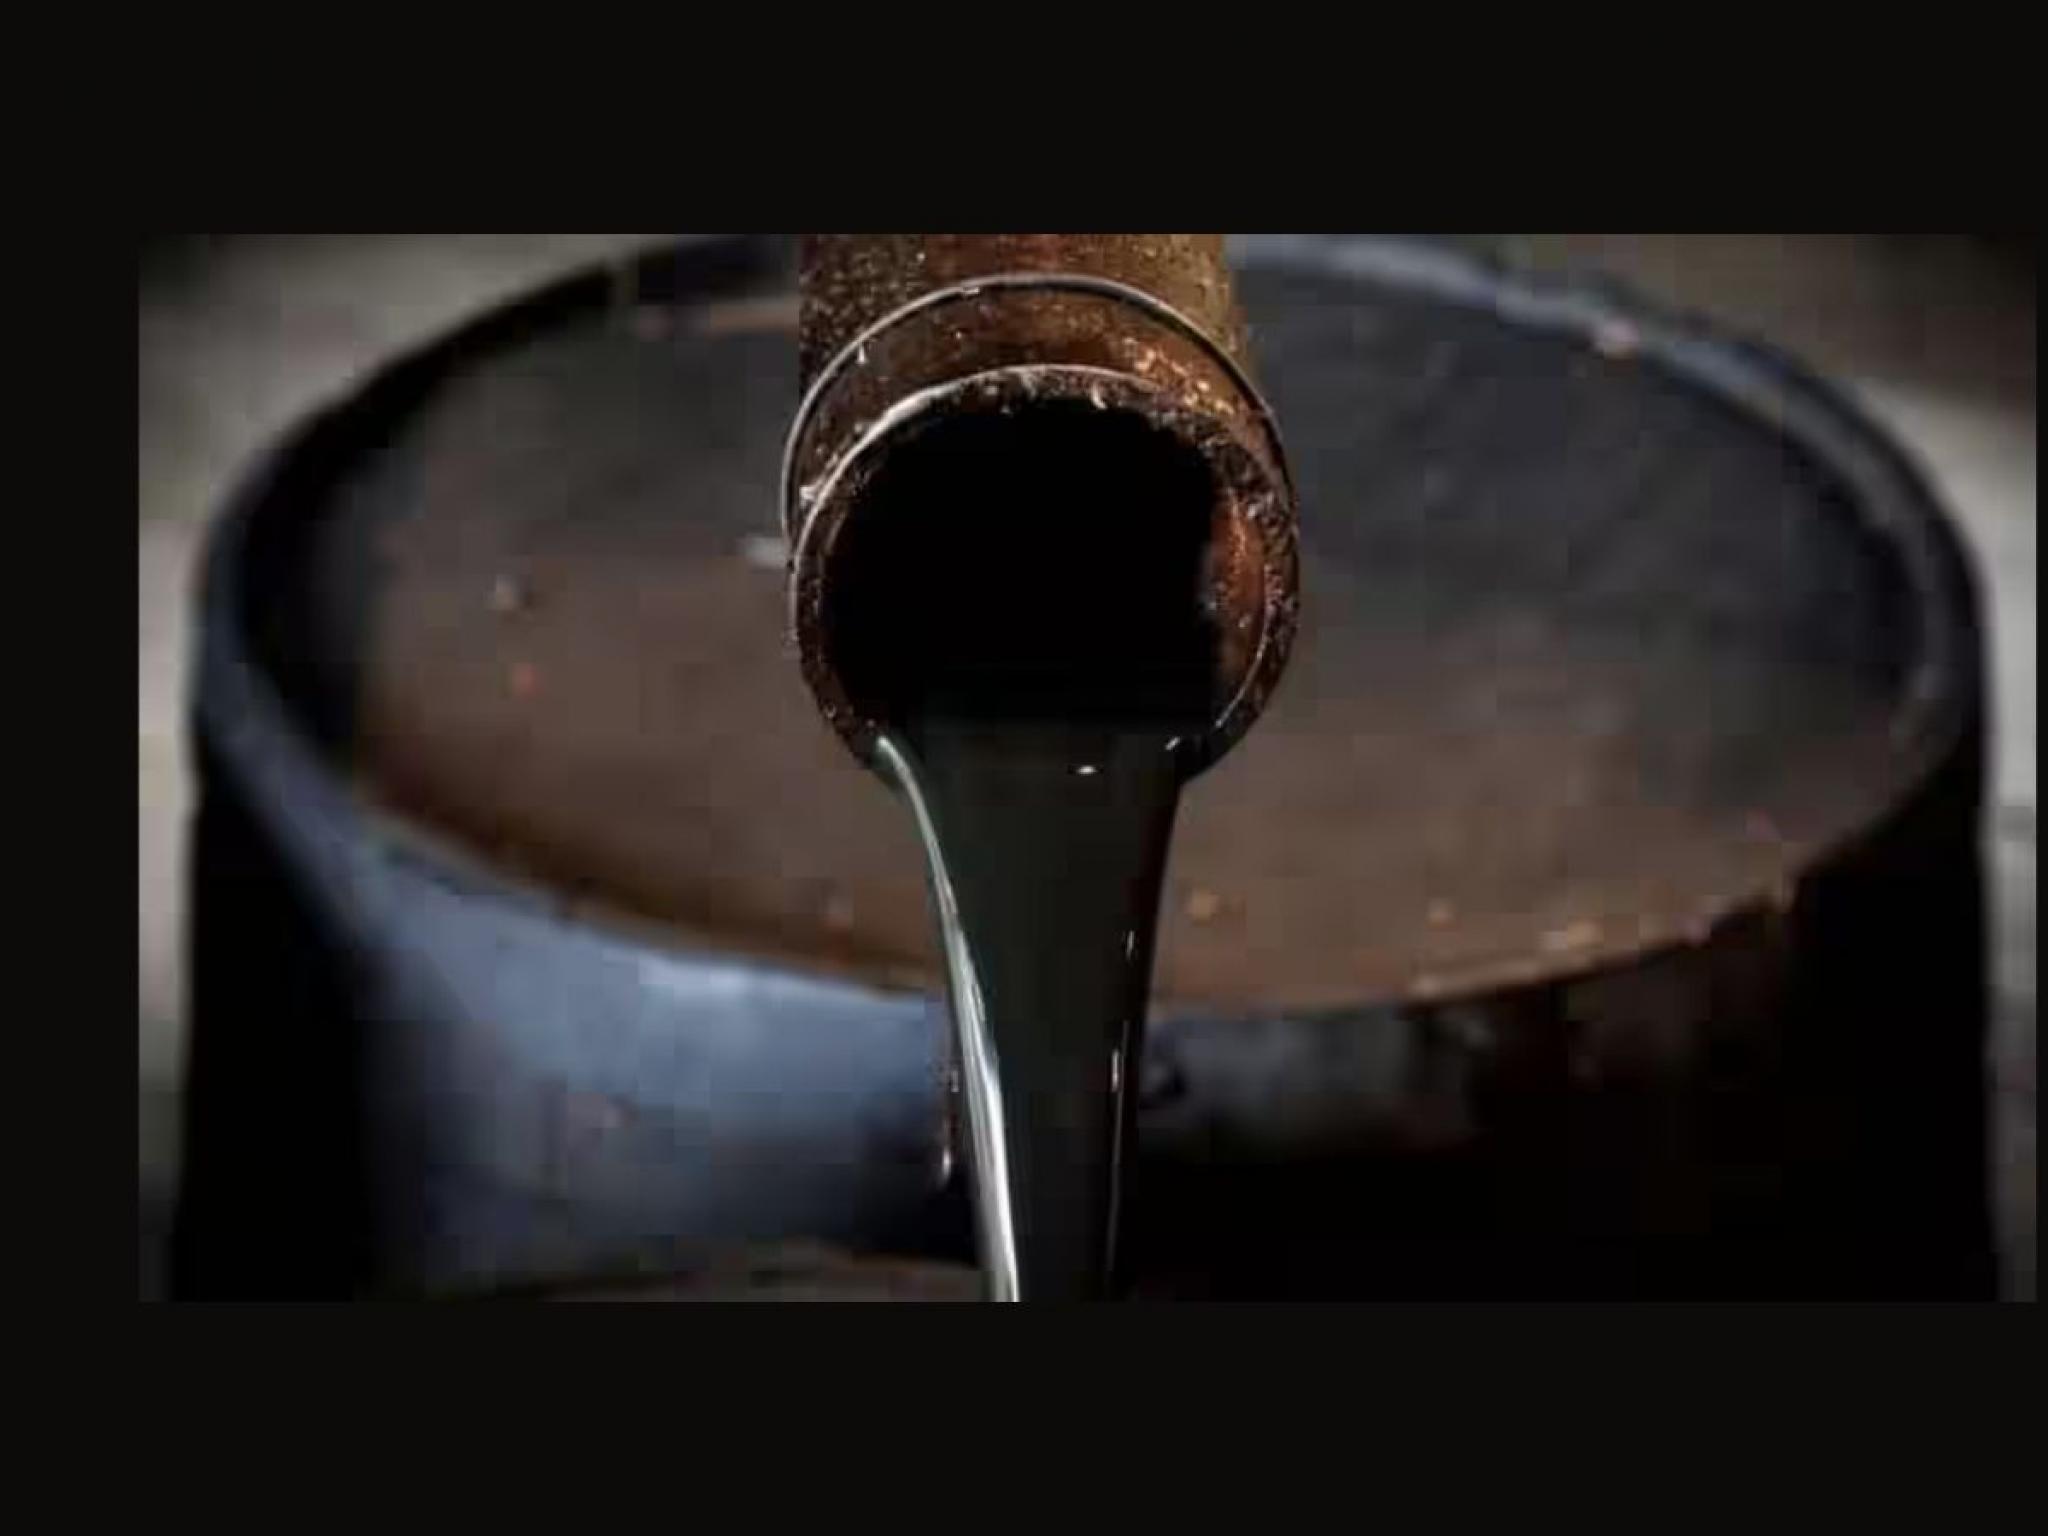  crude-oil-falls-sharply-ambrx-biopharma-shares-spike-higher 